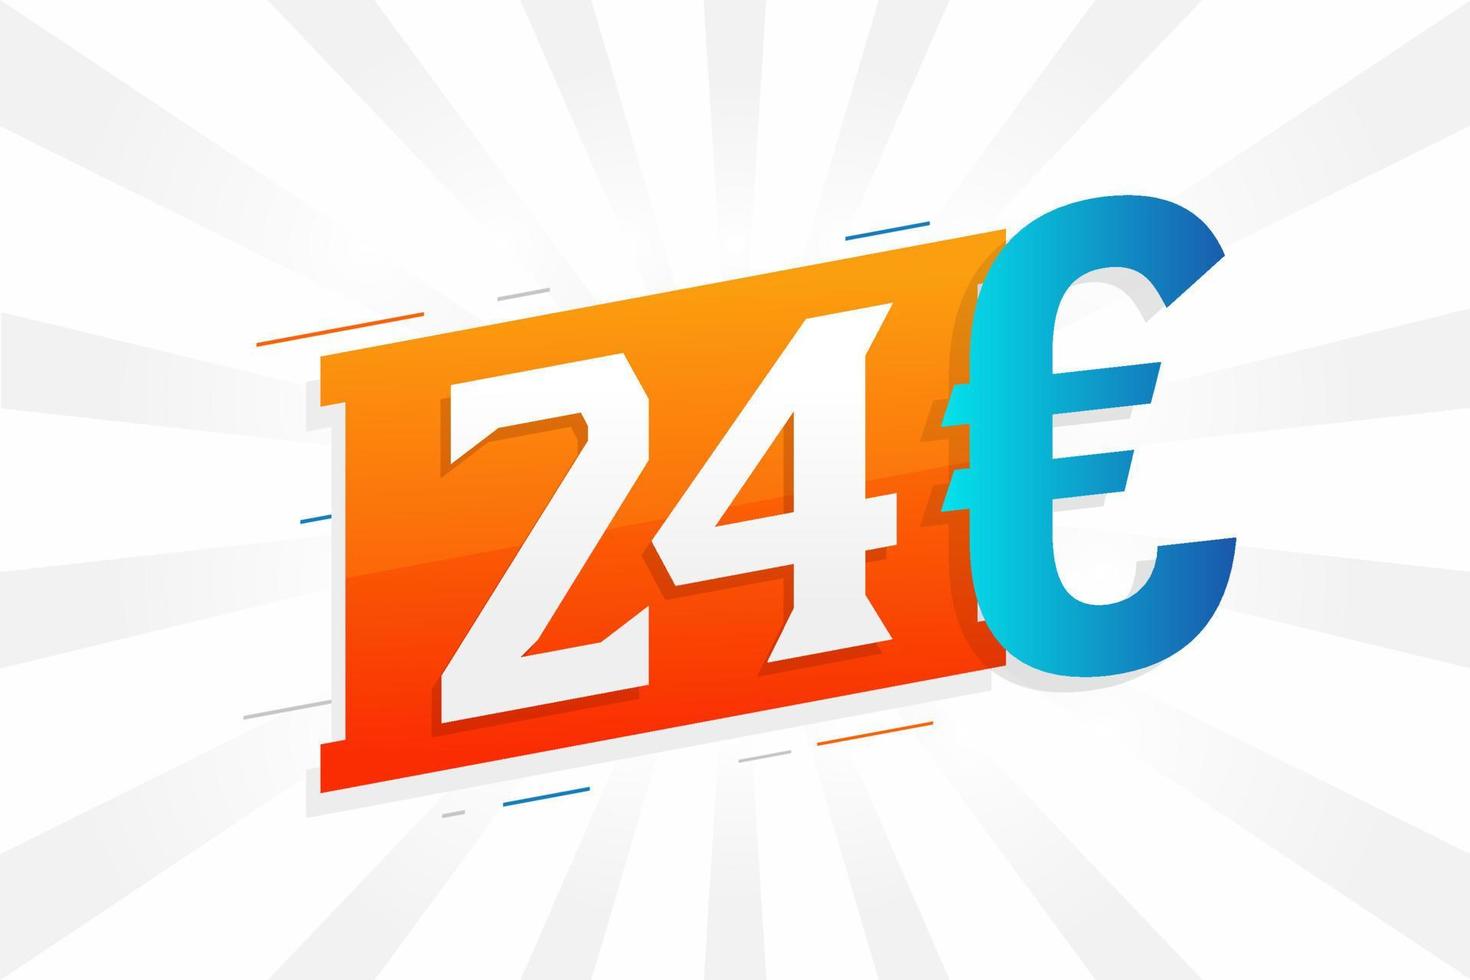 Símbolo de texto vectorial de moneda de 24 euros. vector de stock de dinero de la unión europea de 24 euros